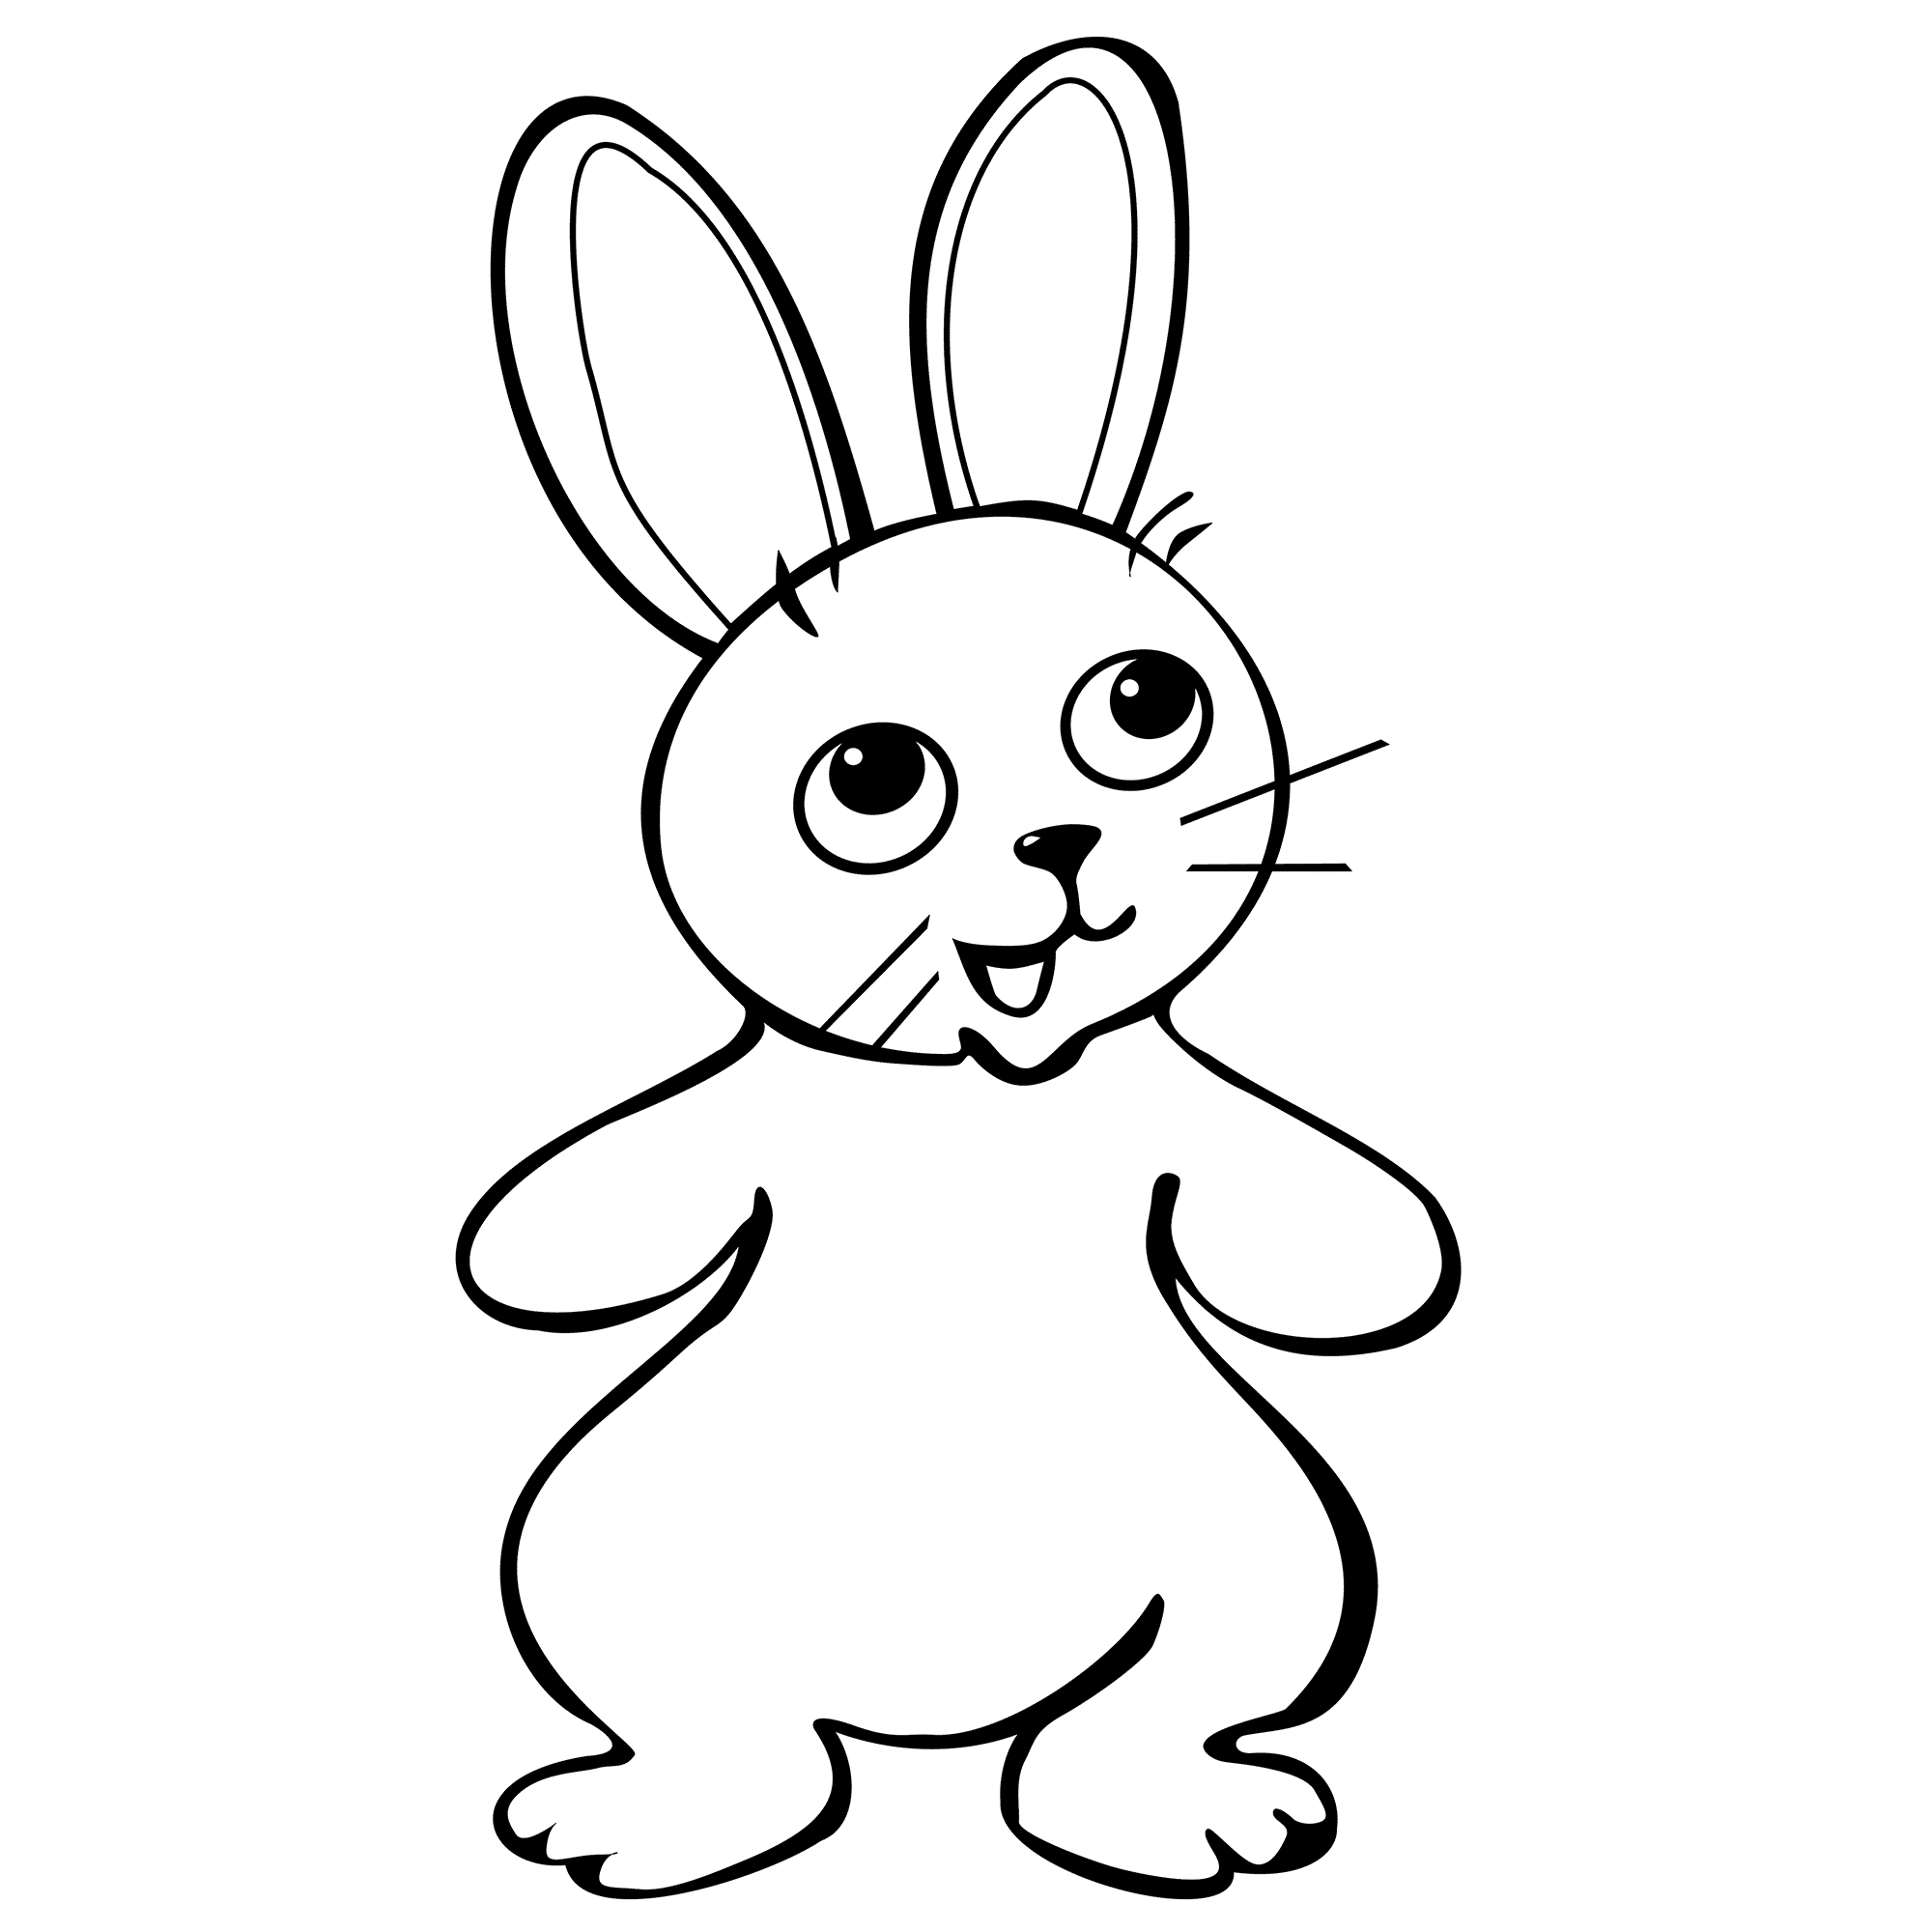 colouring page rabbit free printable rabbit coloring pages for kids page colouring rabbit 